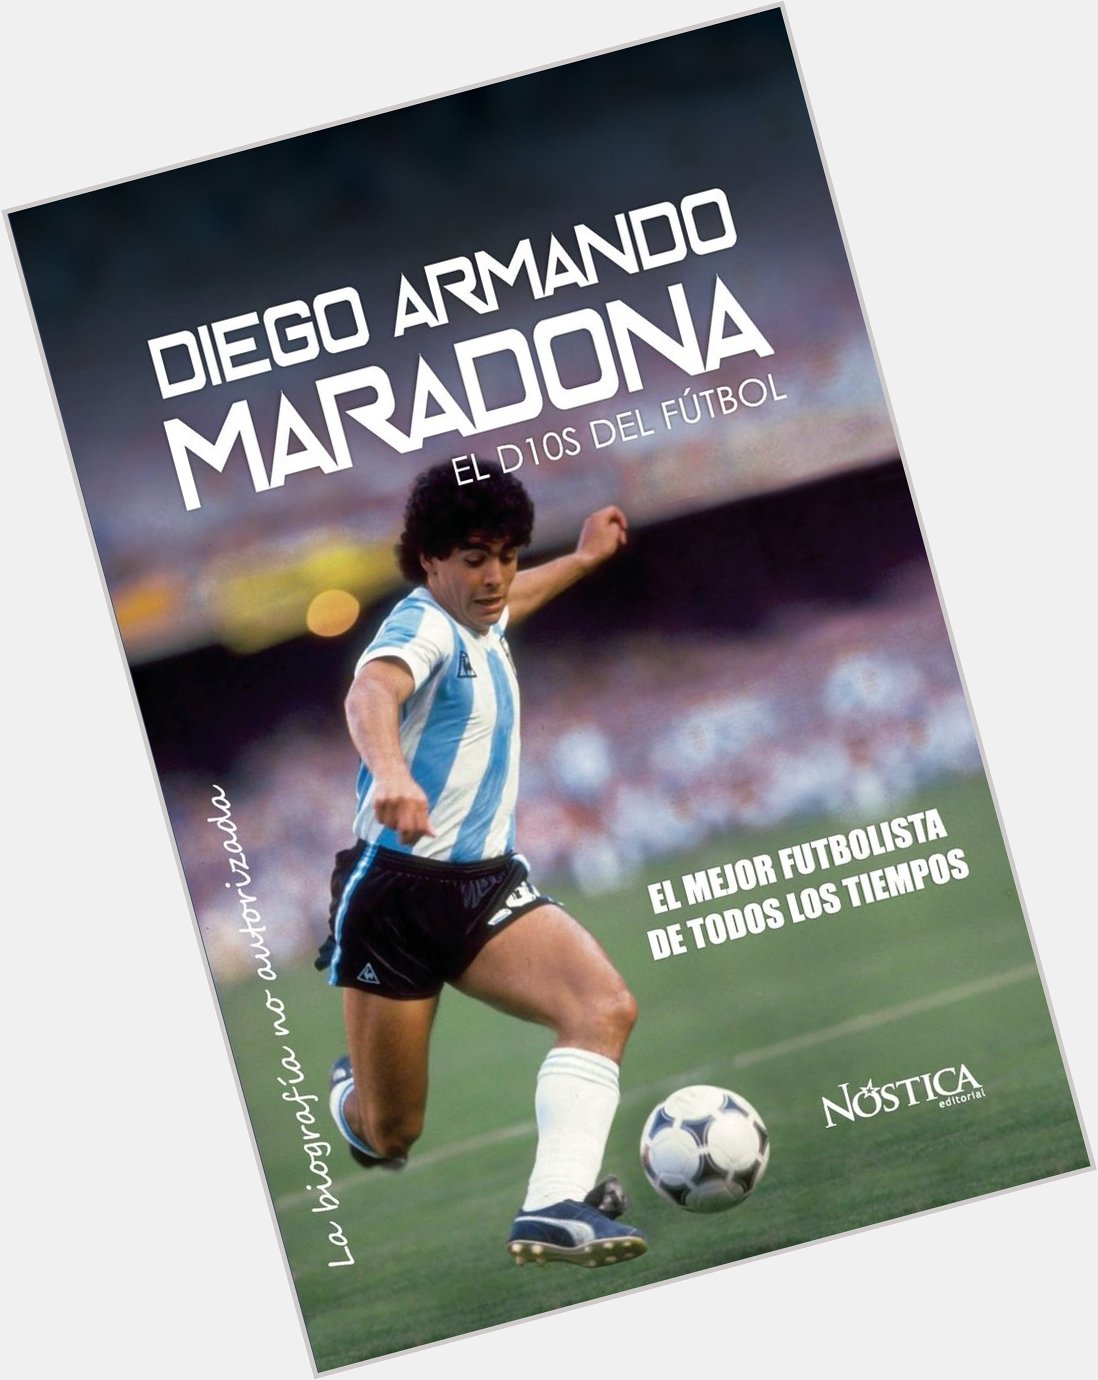 Happy birthday to Diego armando maradona 